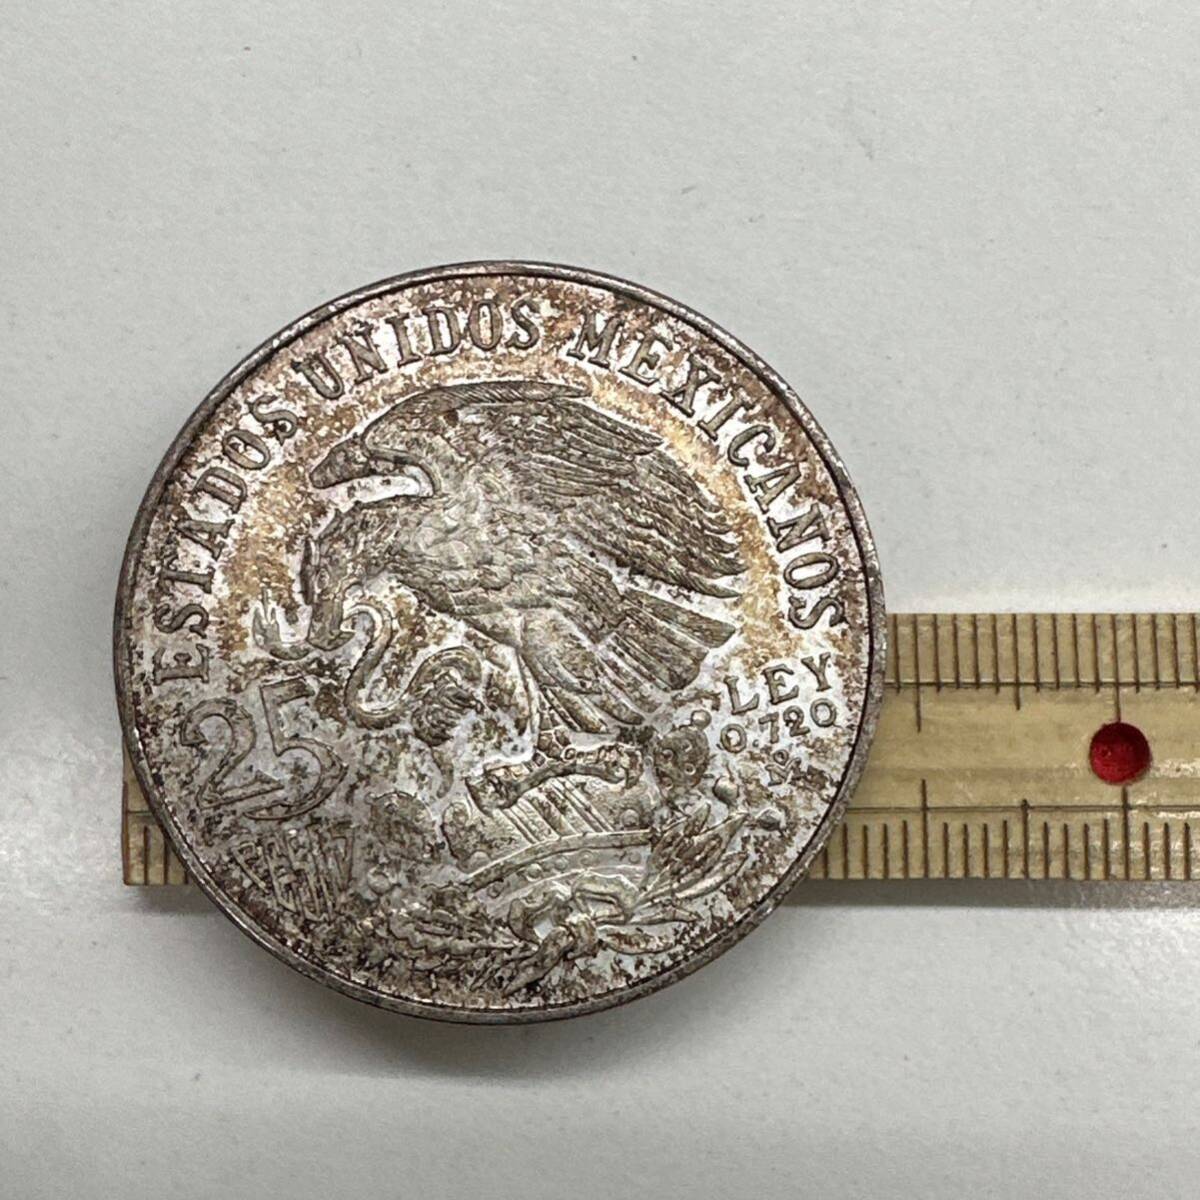 【TS0319】1968年 メキシコオリンピック 25ペソ銀貨 硬貨 コイン 通貨 貨幣 レトロ アンティーク コレクション_画像4